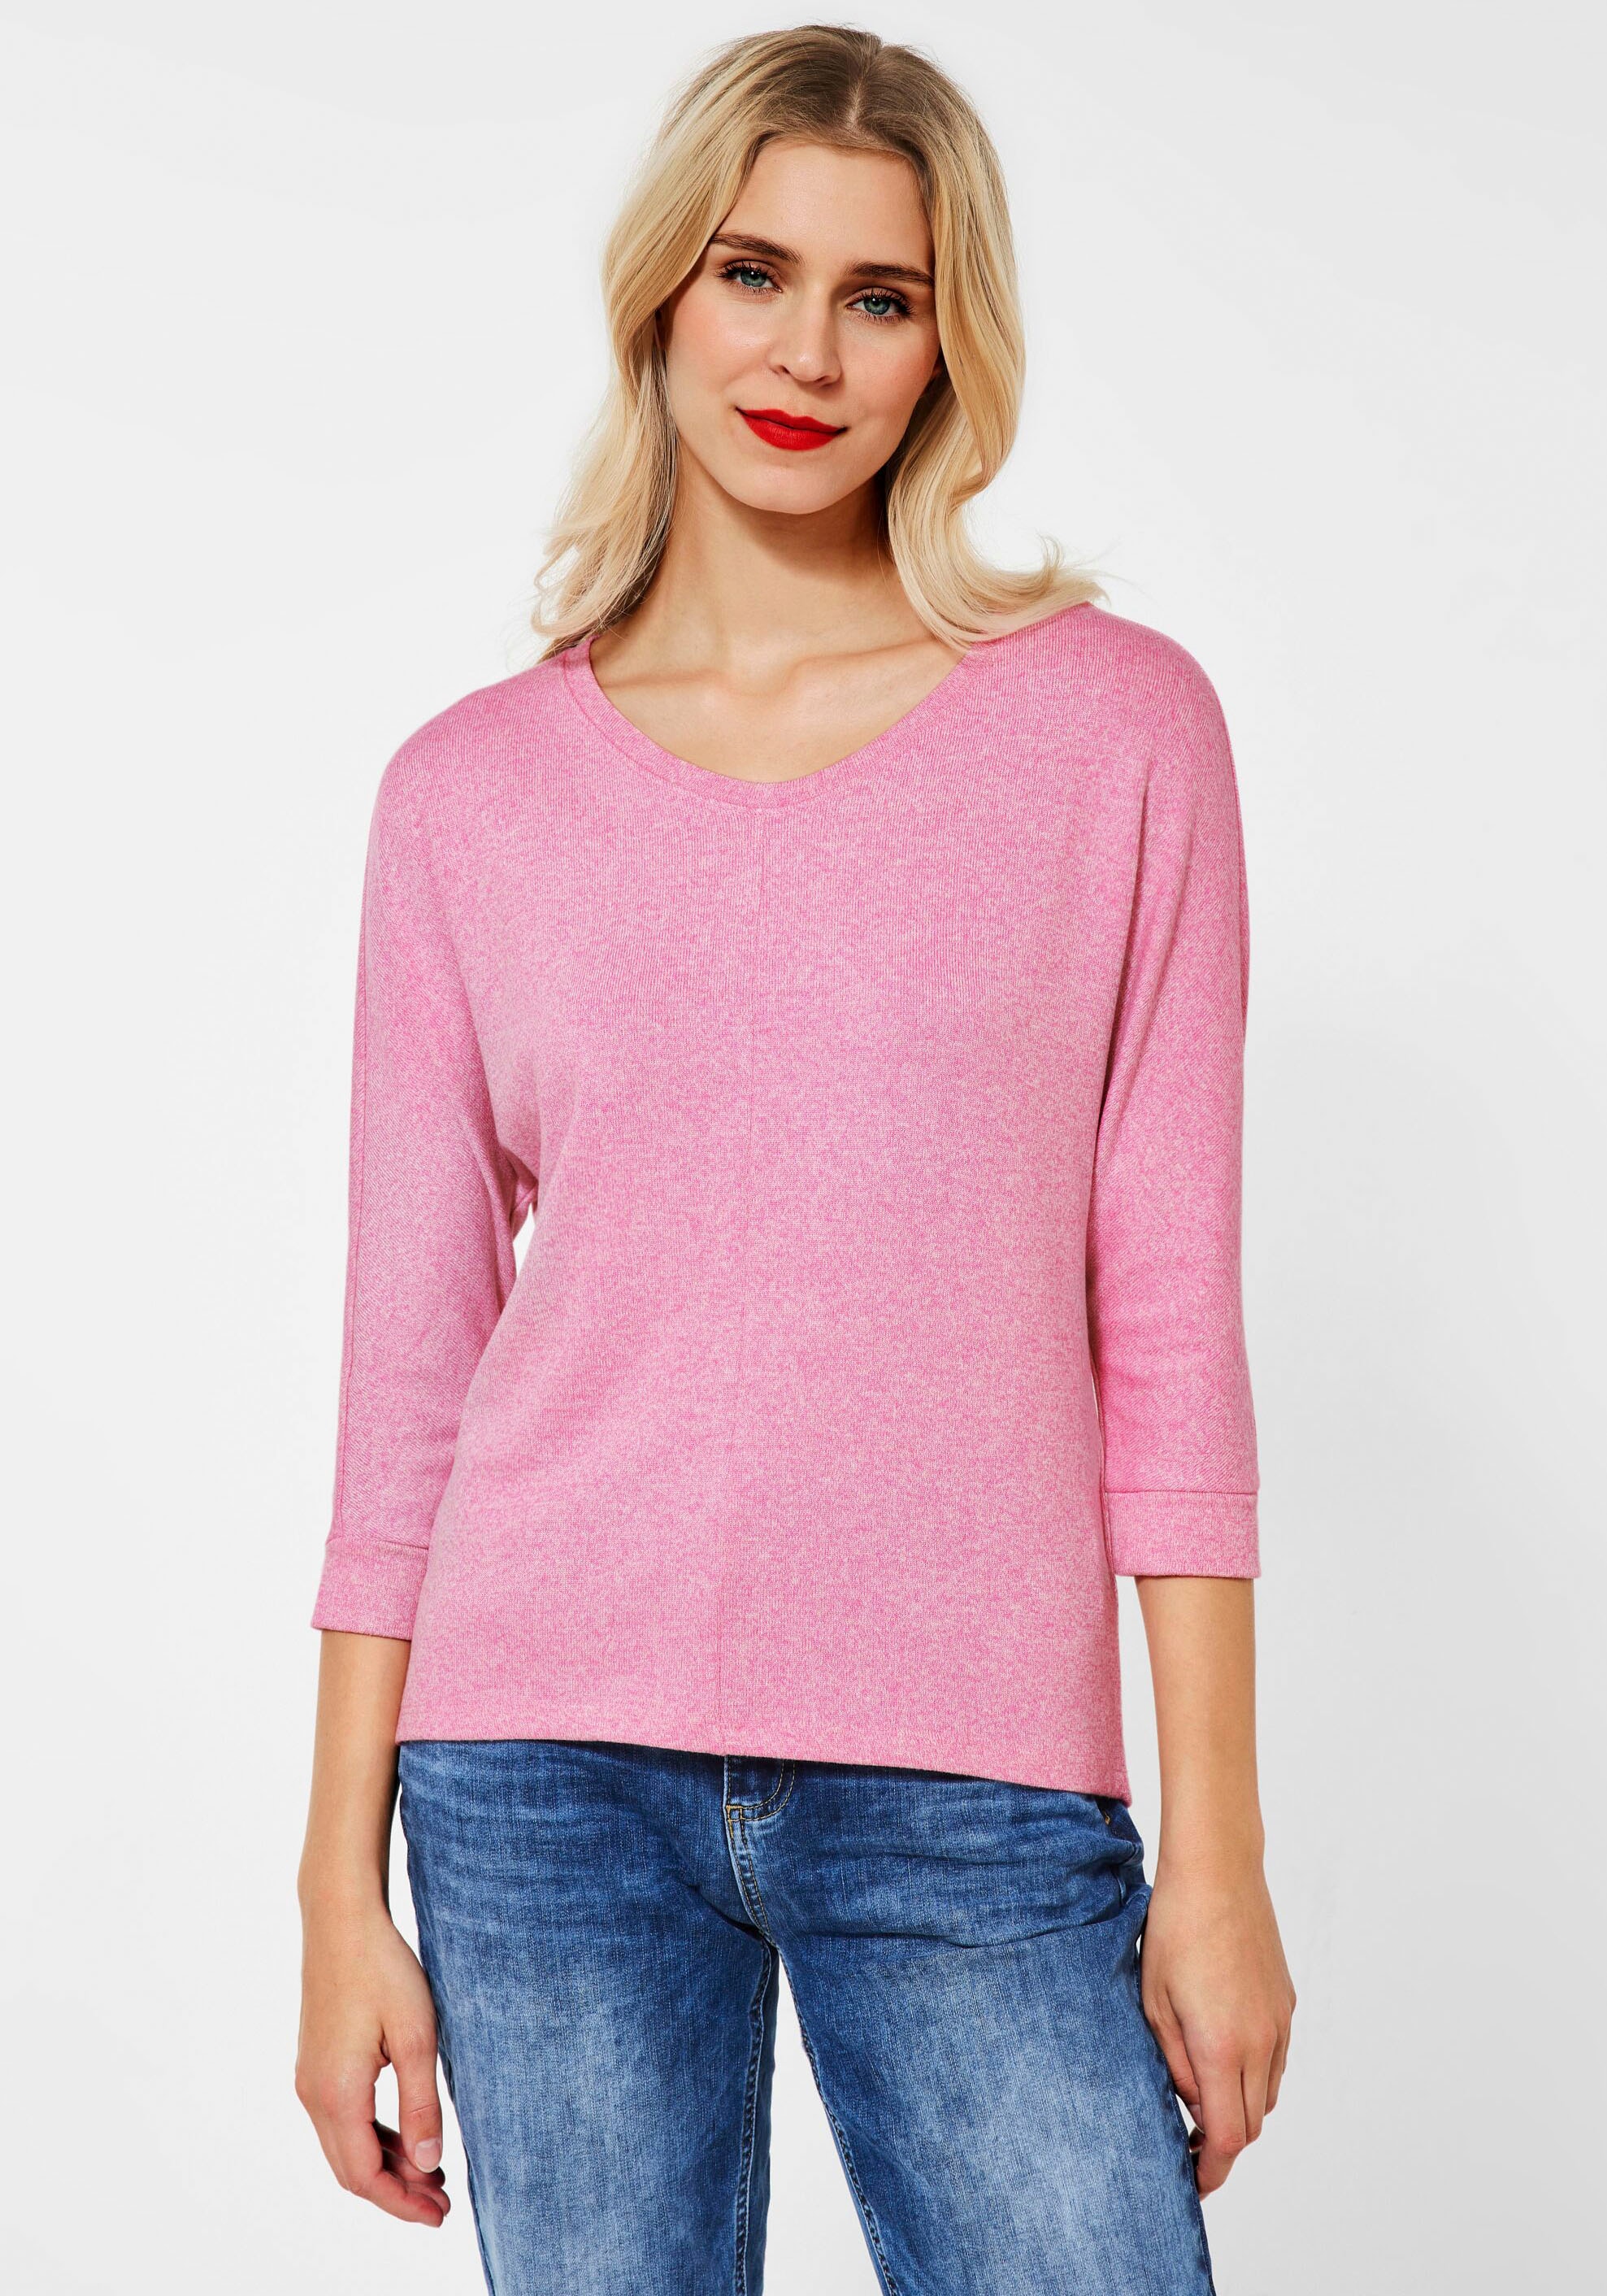 Street One Damen A318641 T-Shirt, pink Crush Melange, 42